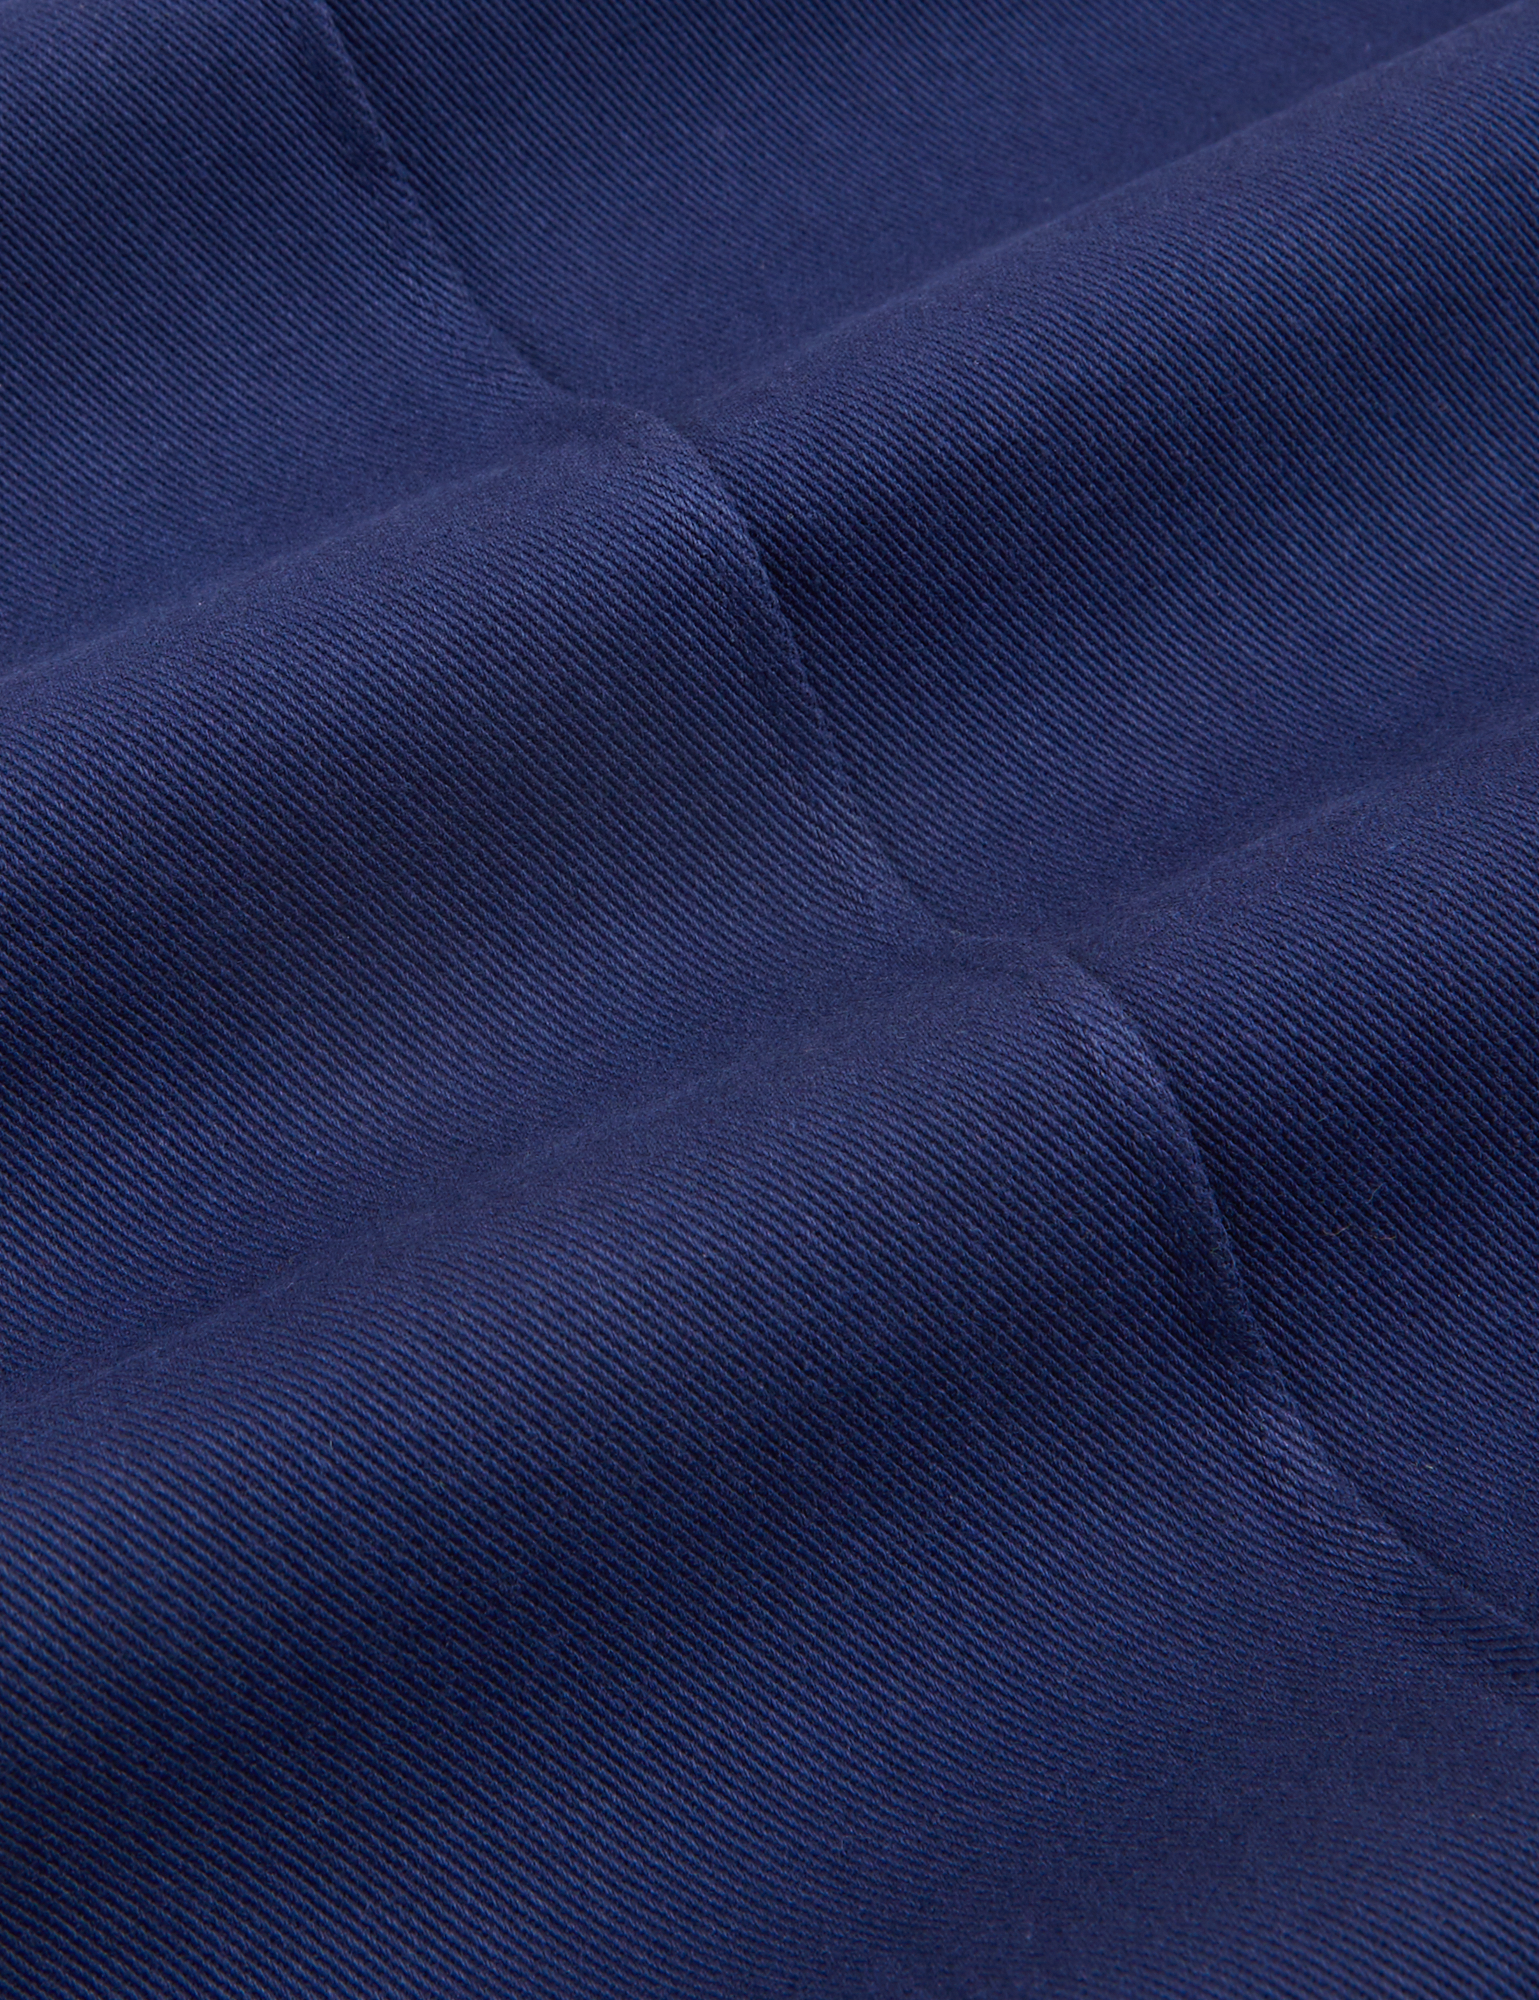 Western Pants in Navy fabric detail